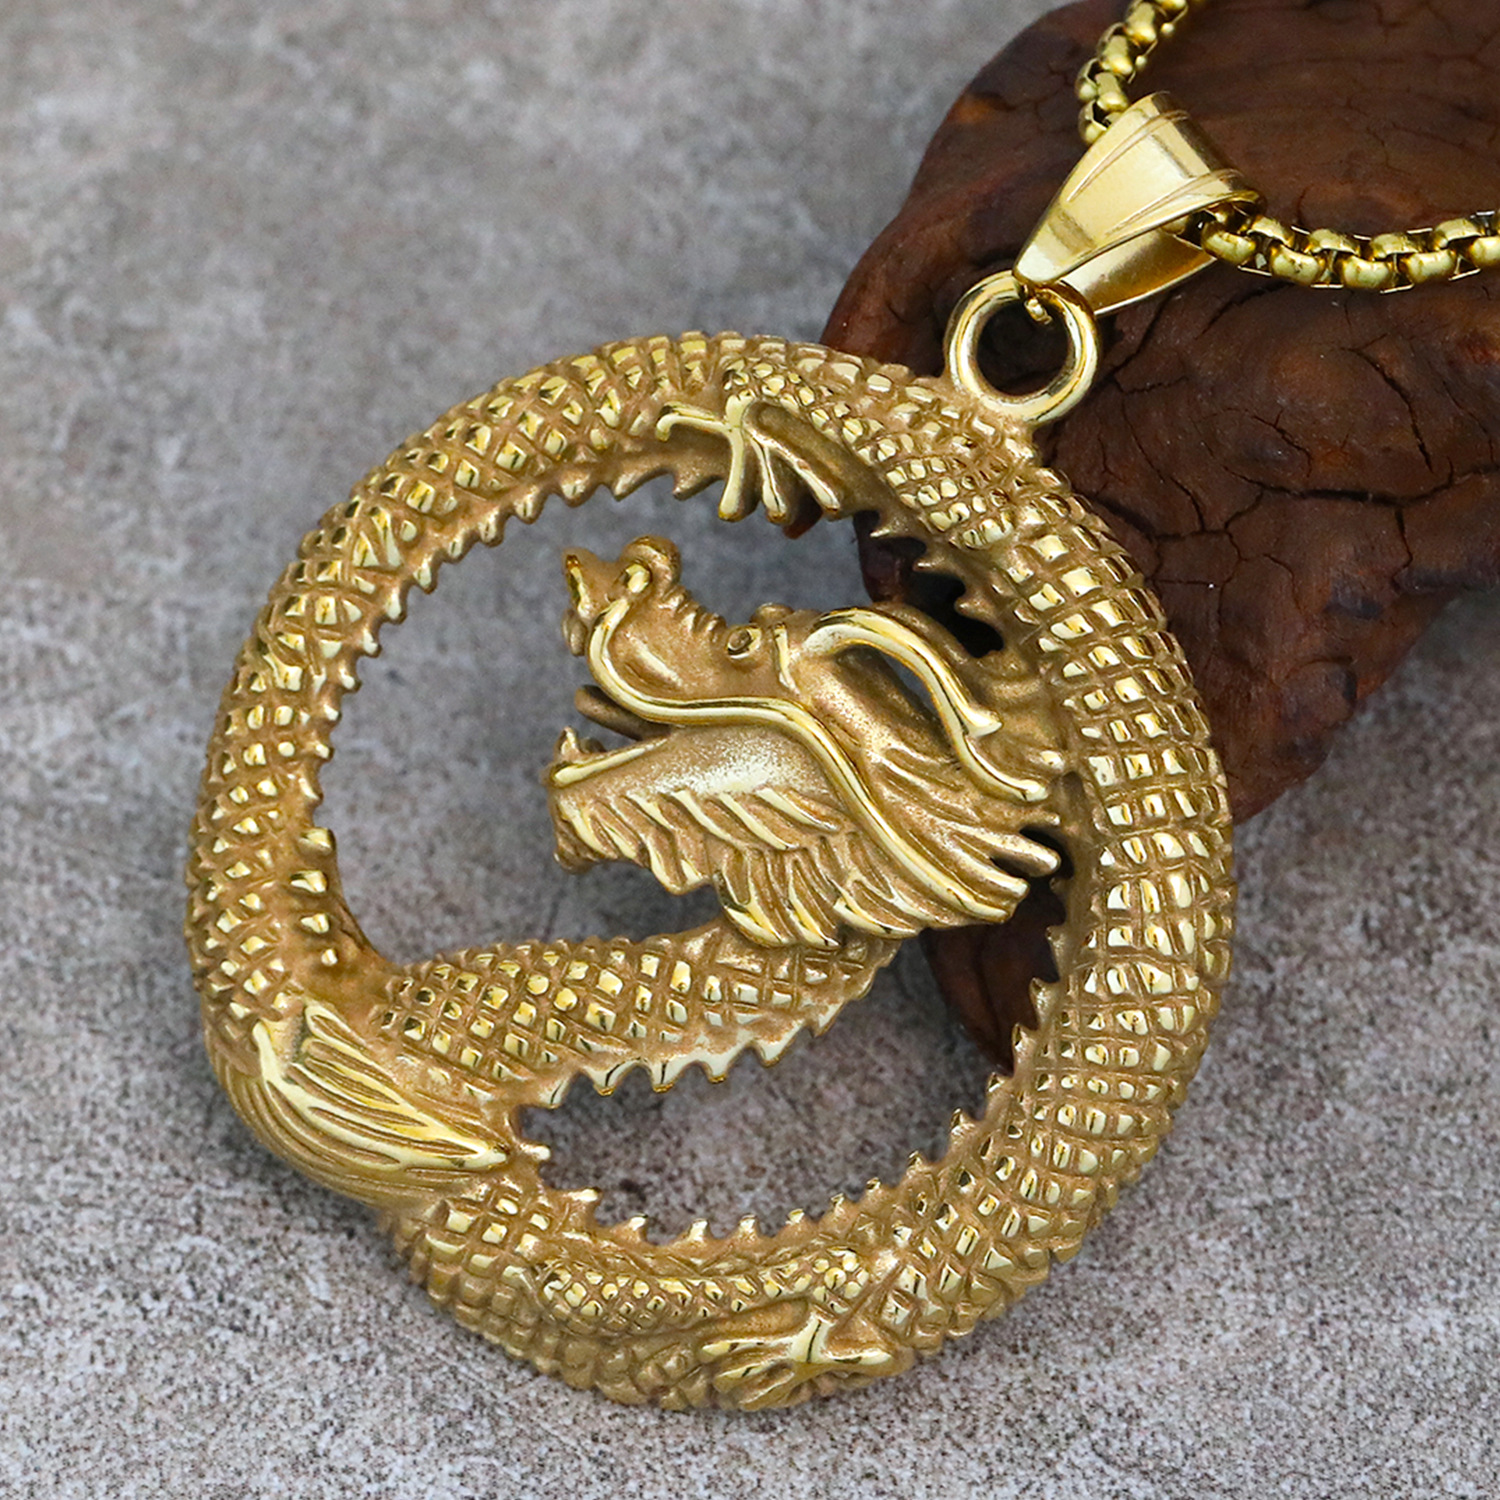 Gold pendant + necklace